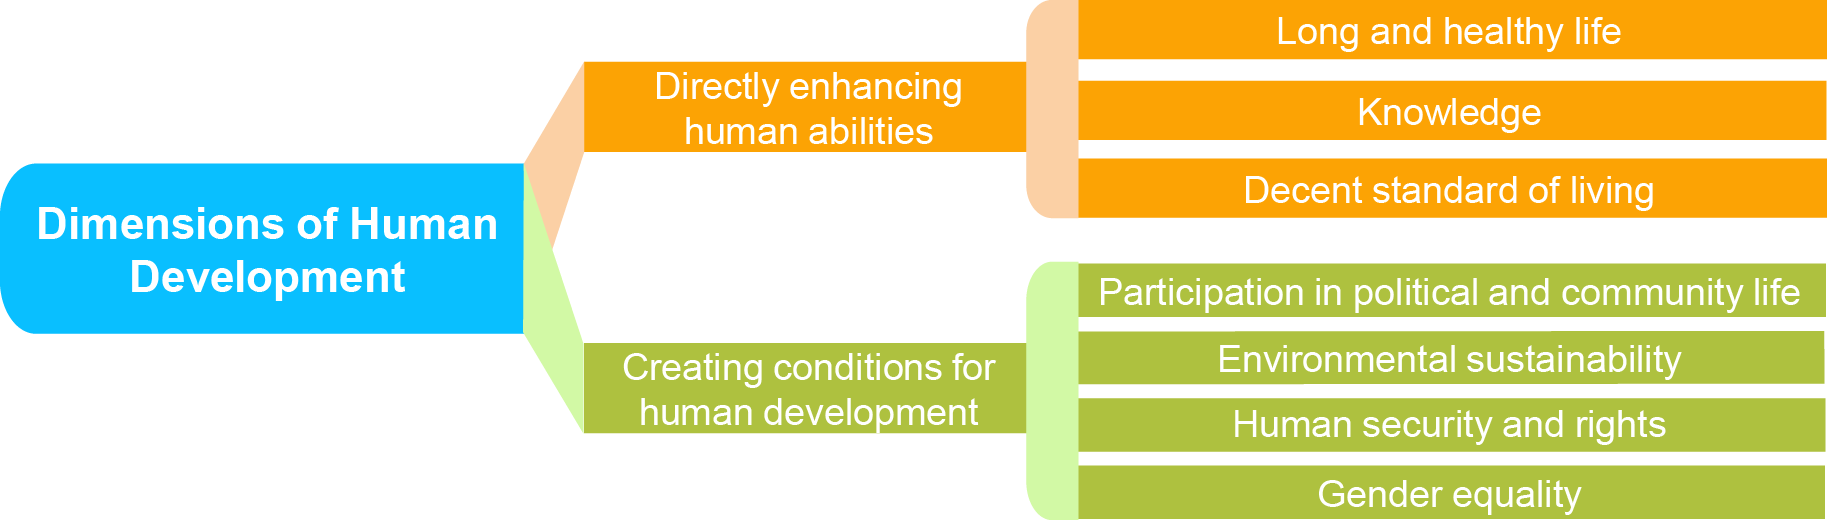 3 domains of human development